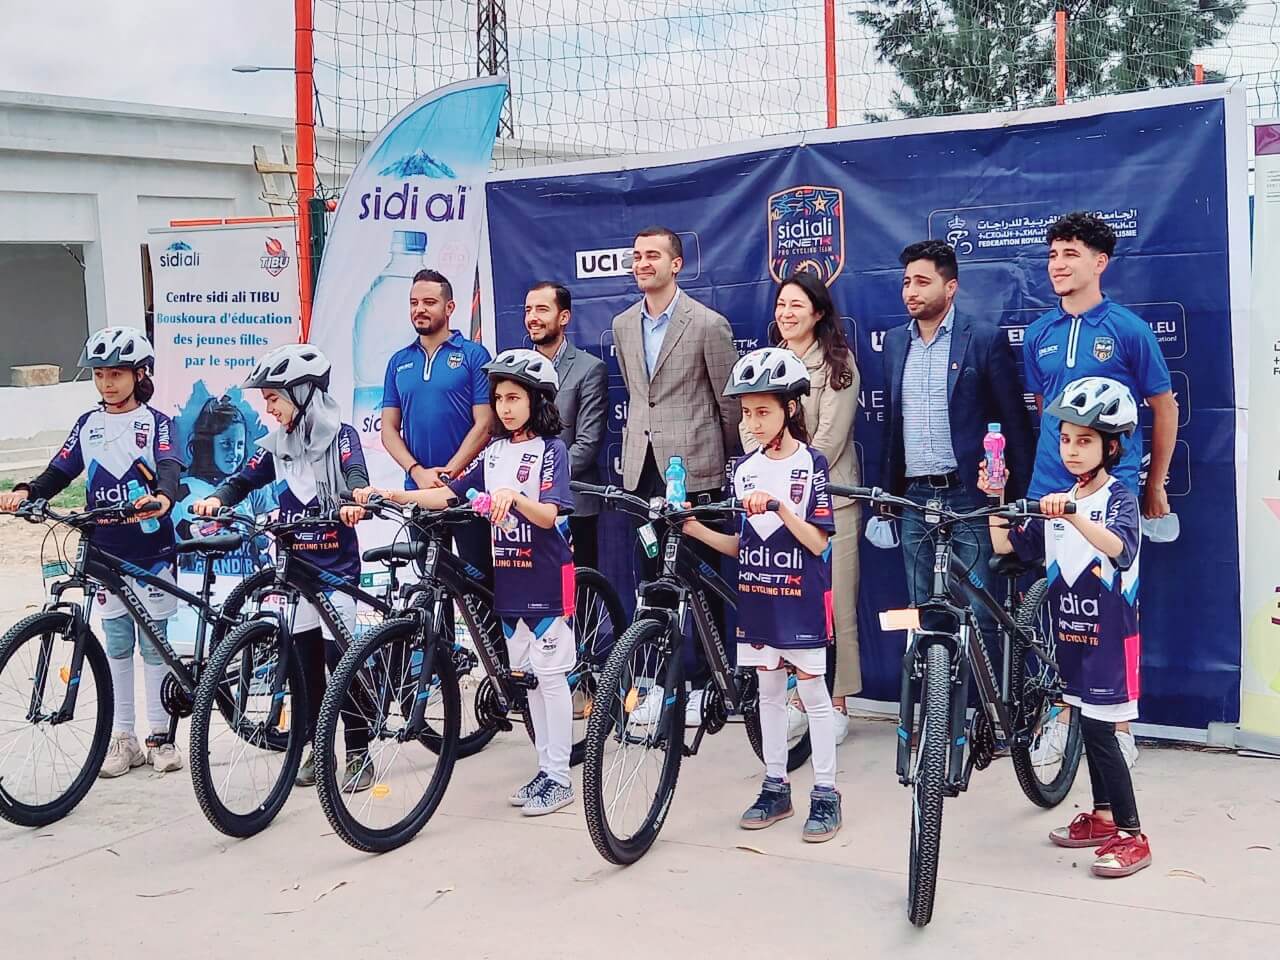 Sidi Ali, Kinetik Pro Cycling Team et Tibu Maroc s’unissent contre l’abandon scolaire